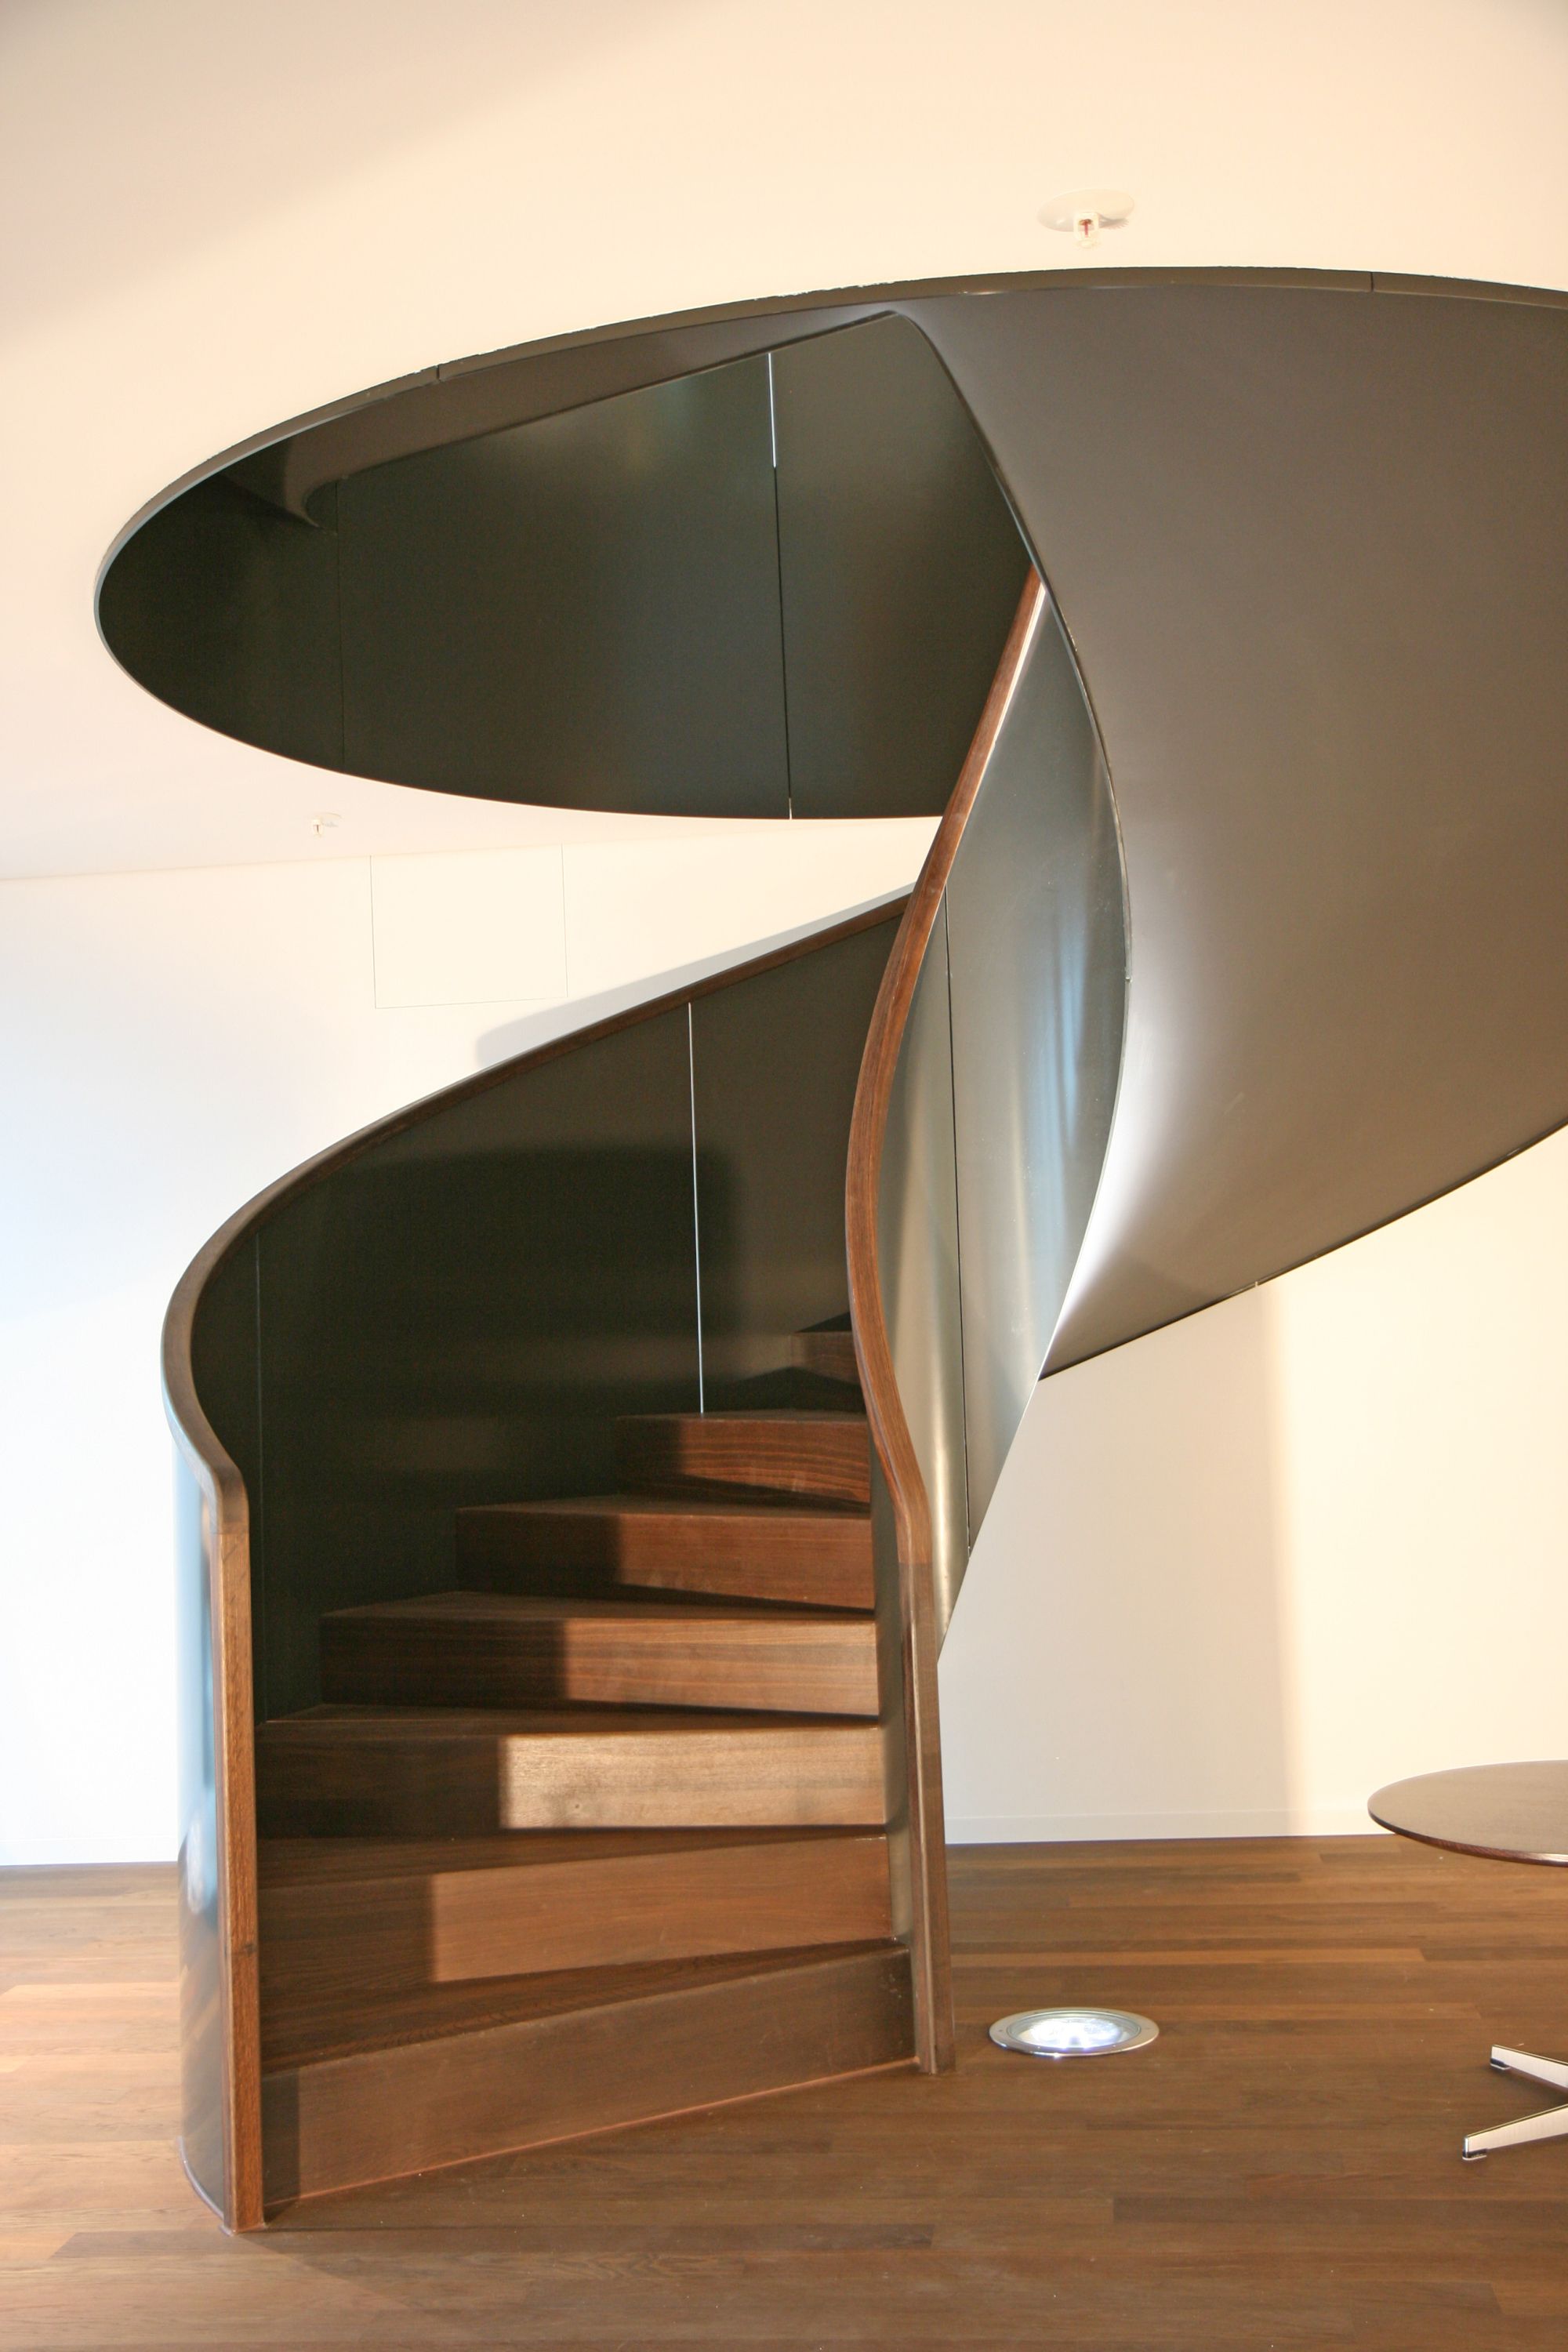 Stair Image 294